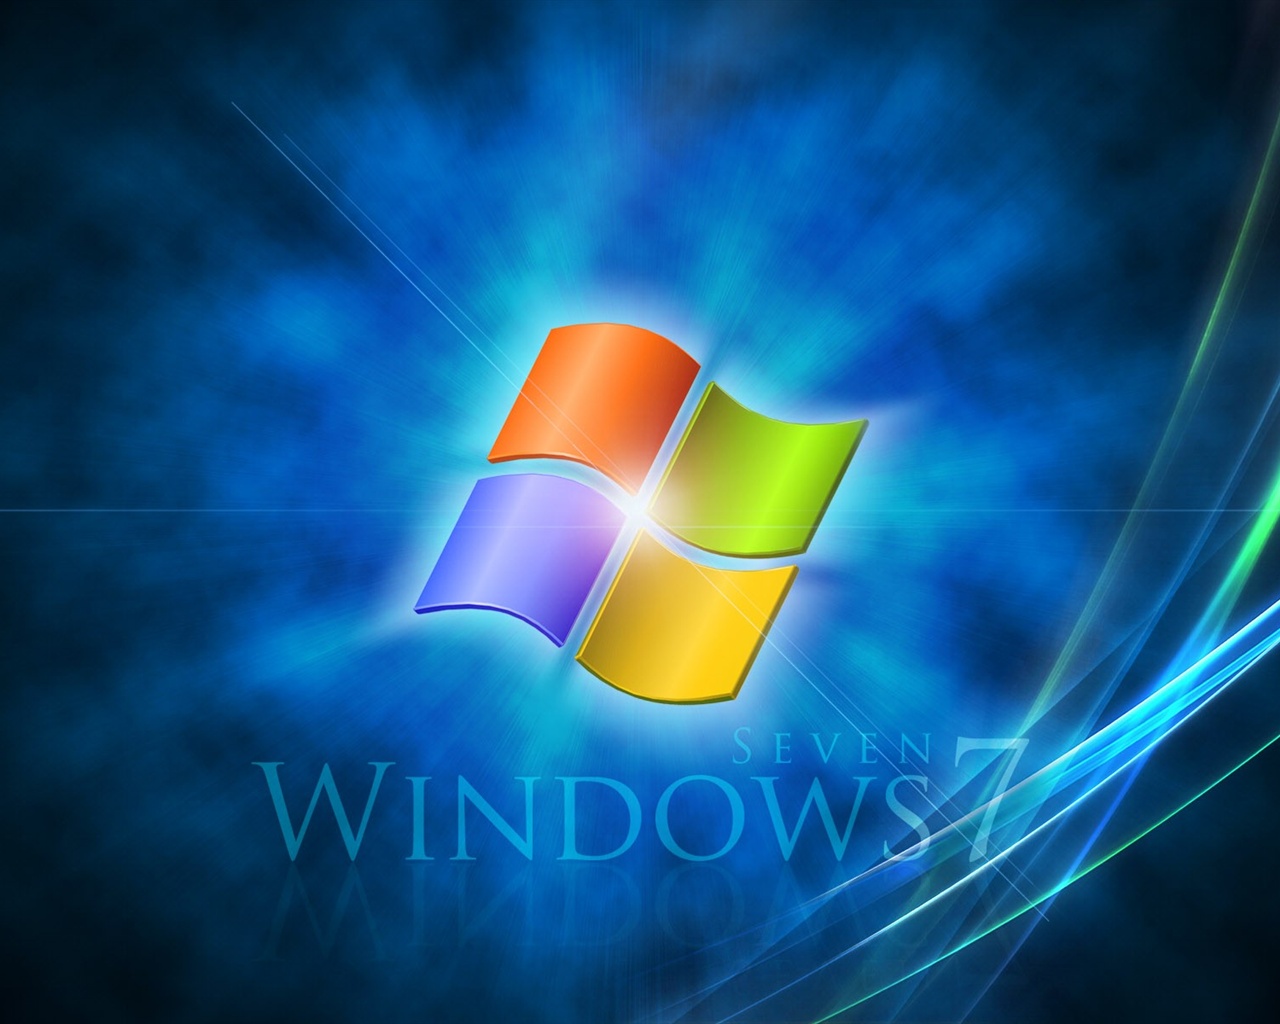 Windows 7 - 1280x1024 Wallpaper 